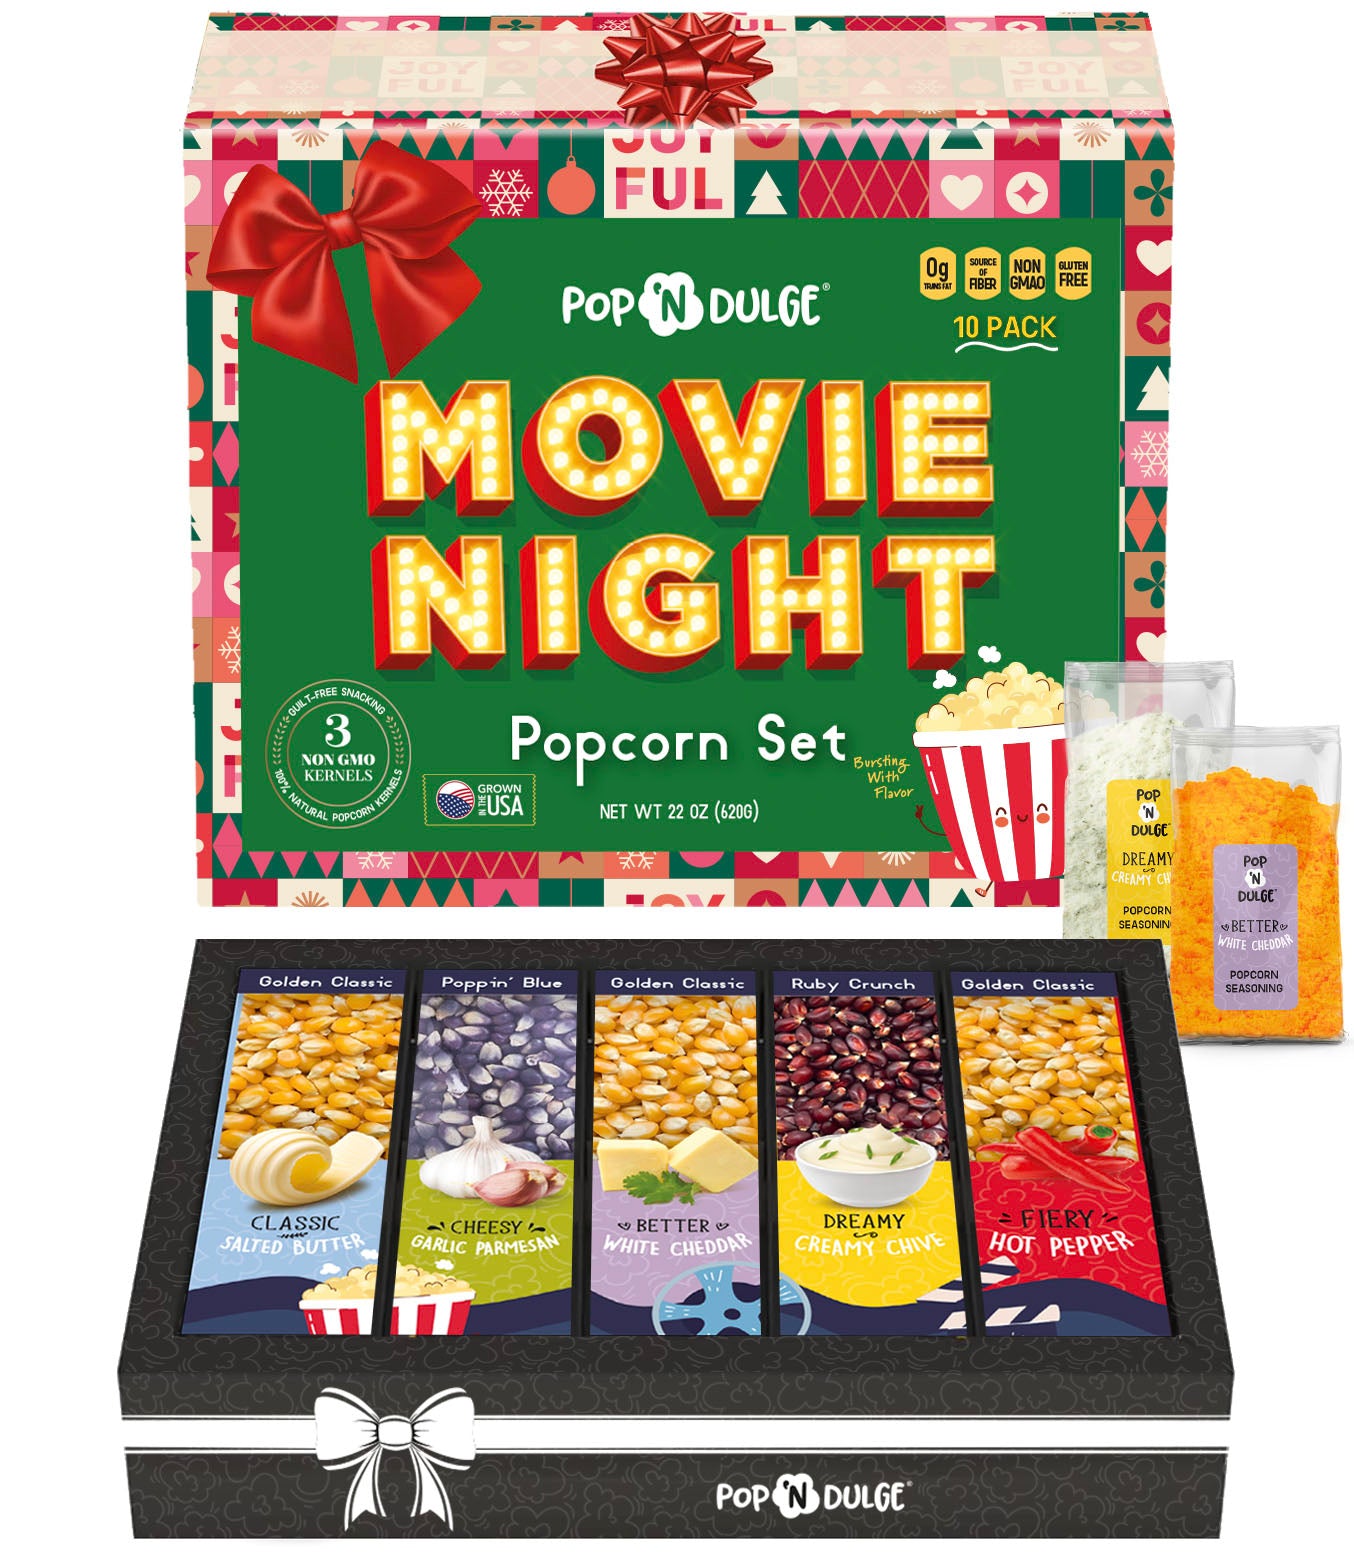 Christmas Movie Night Gourmet Popcorn Gift Set